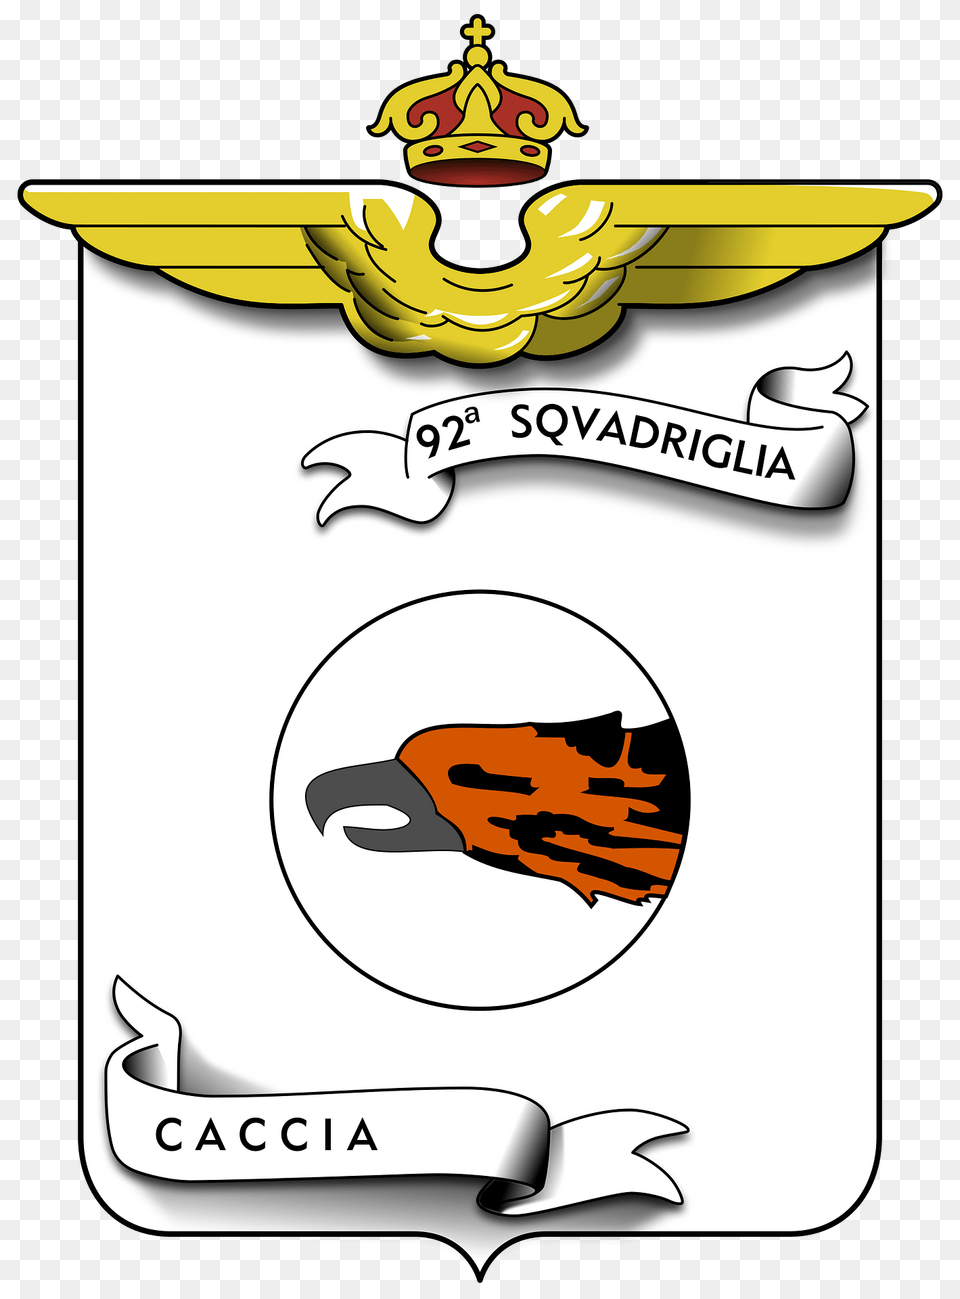 Coa 92 Squadriglia Caccia Clipart, Logo, Smoke Pipe, Emblem, Symbol Free Png Download